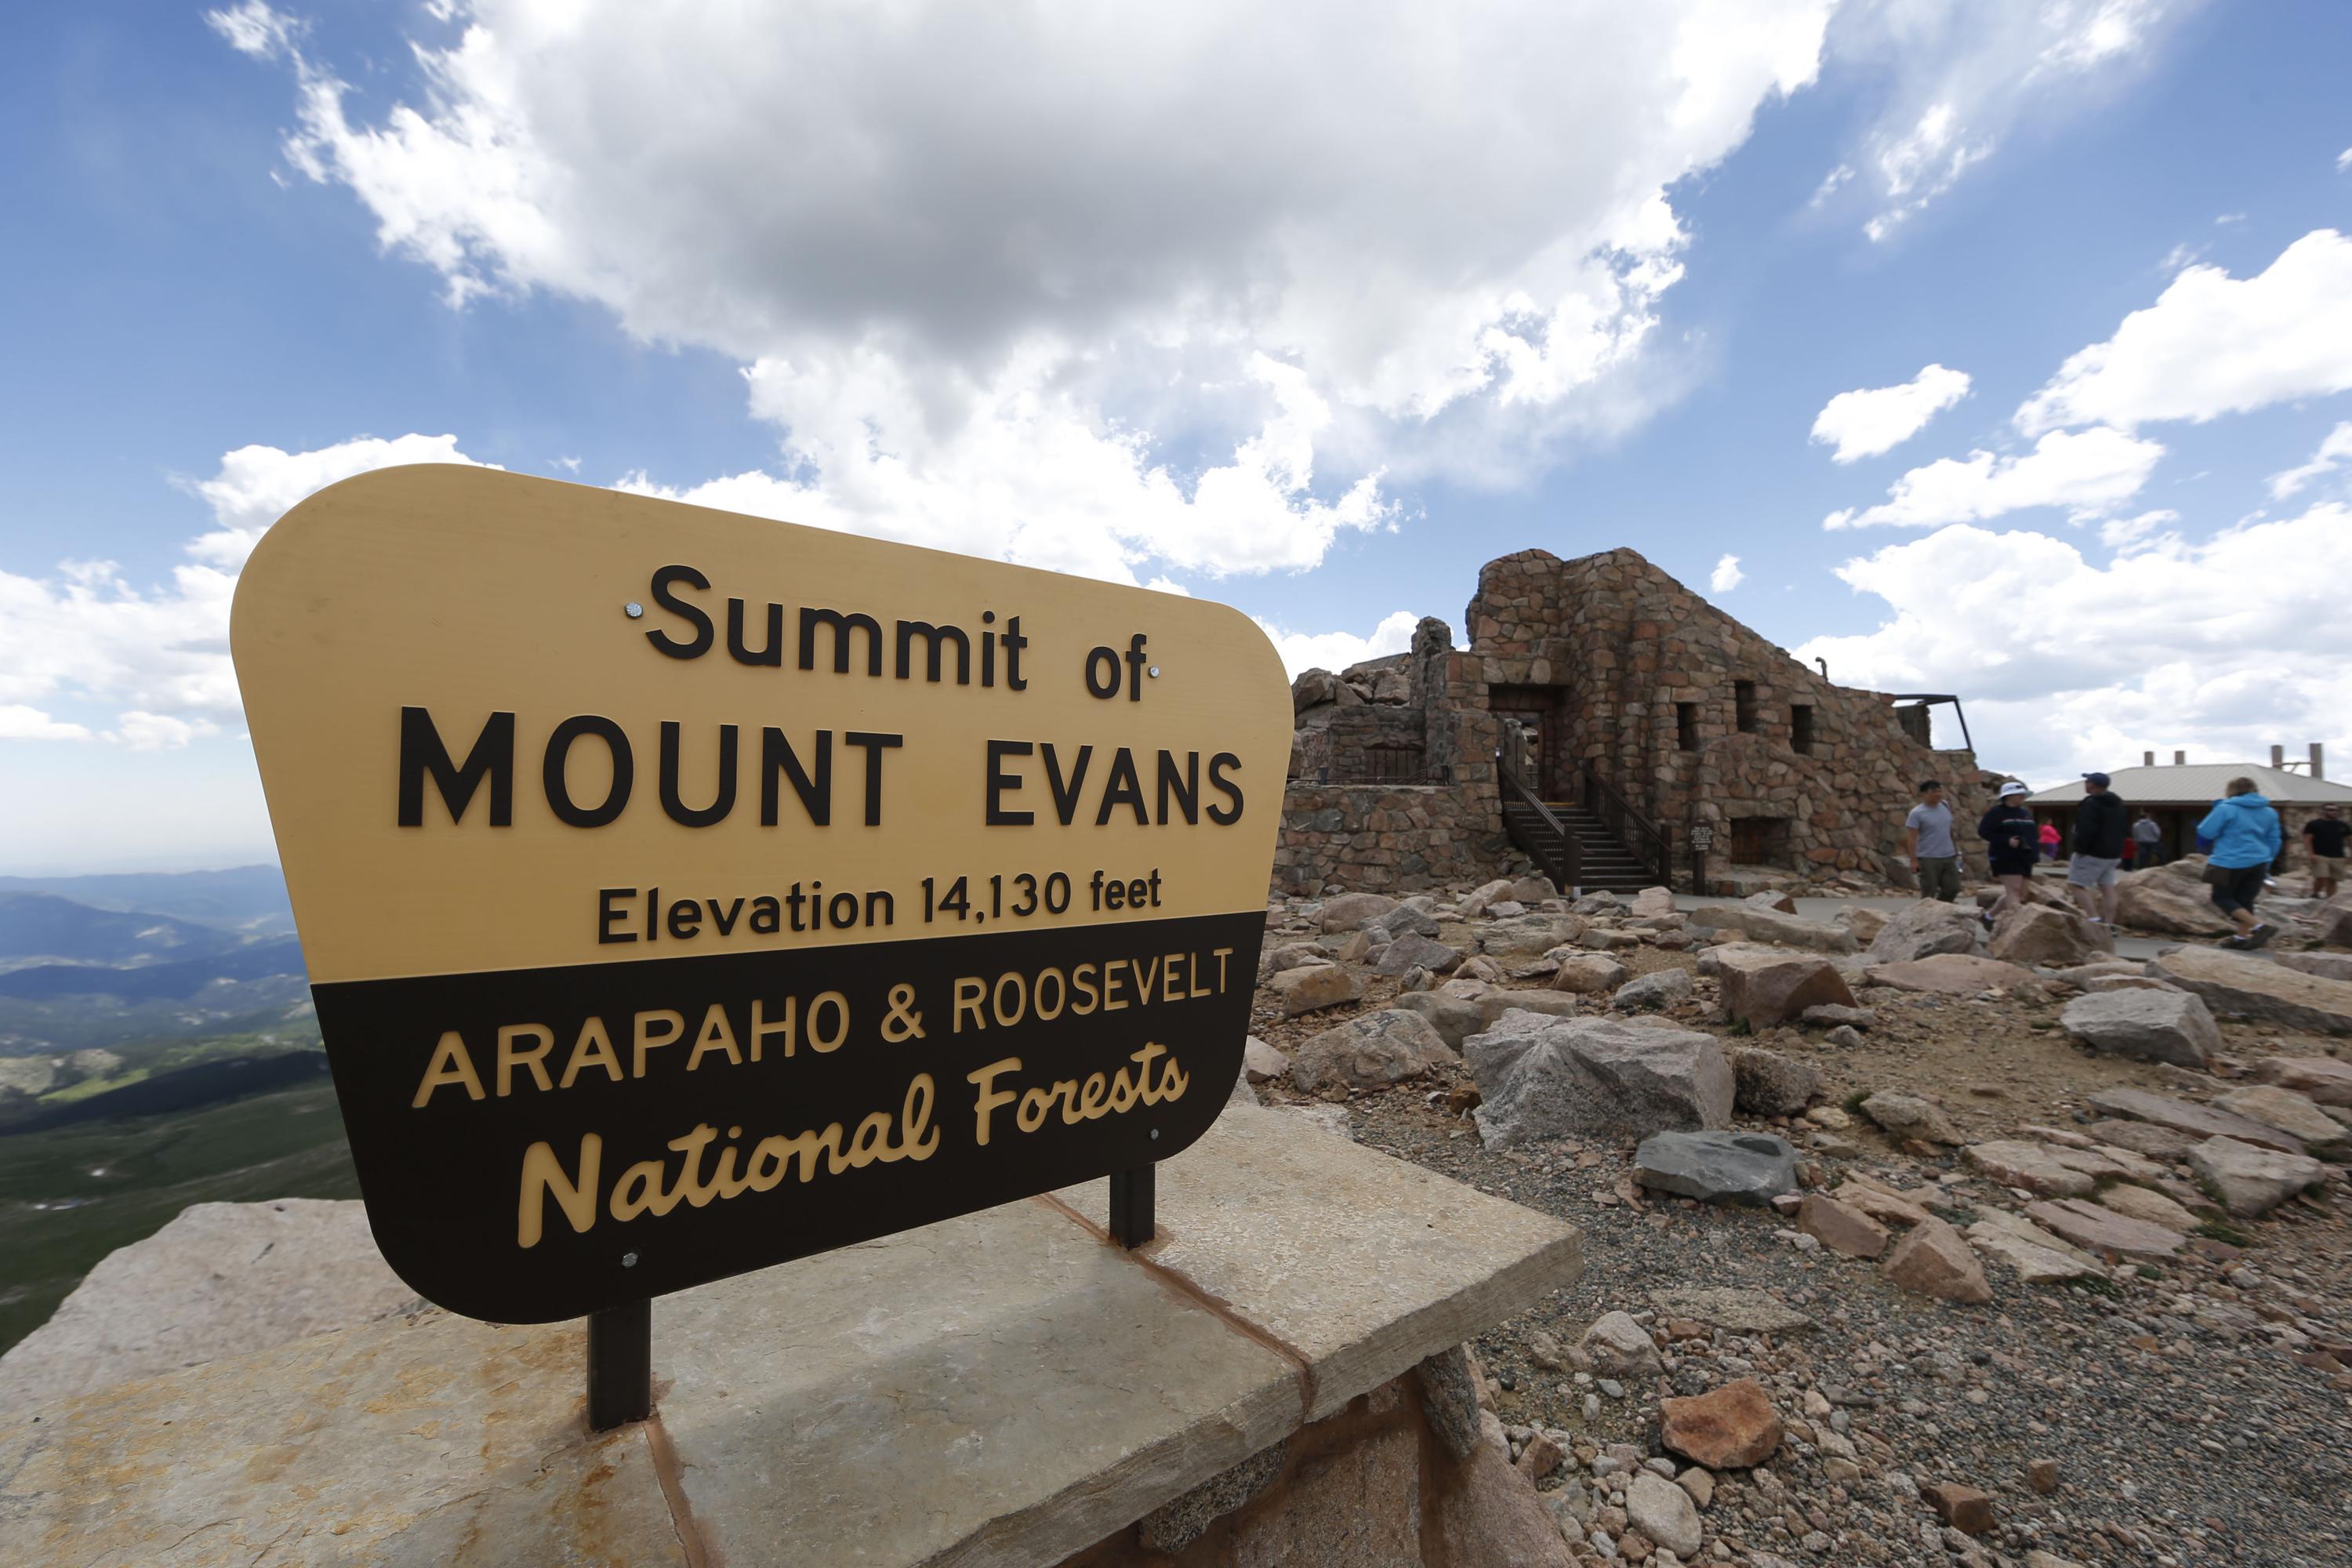 Panel OKs name change of Colorado mountain tied to massacre